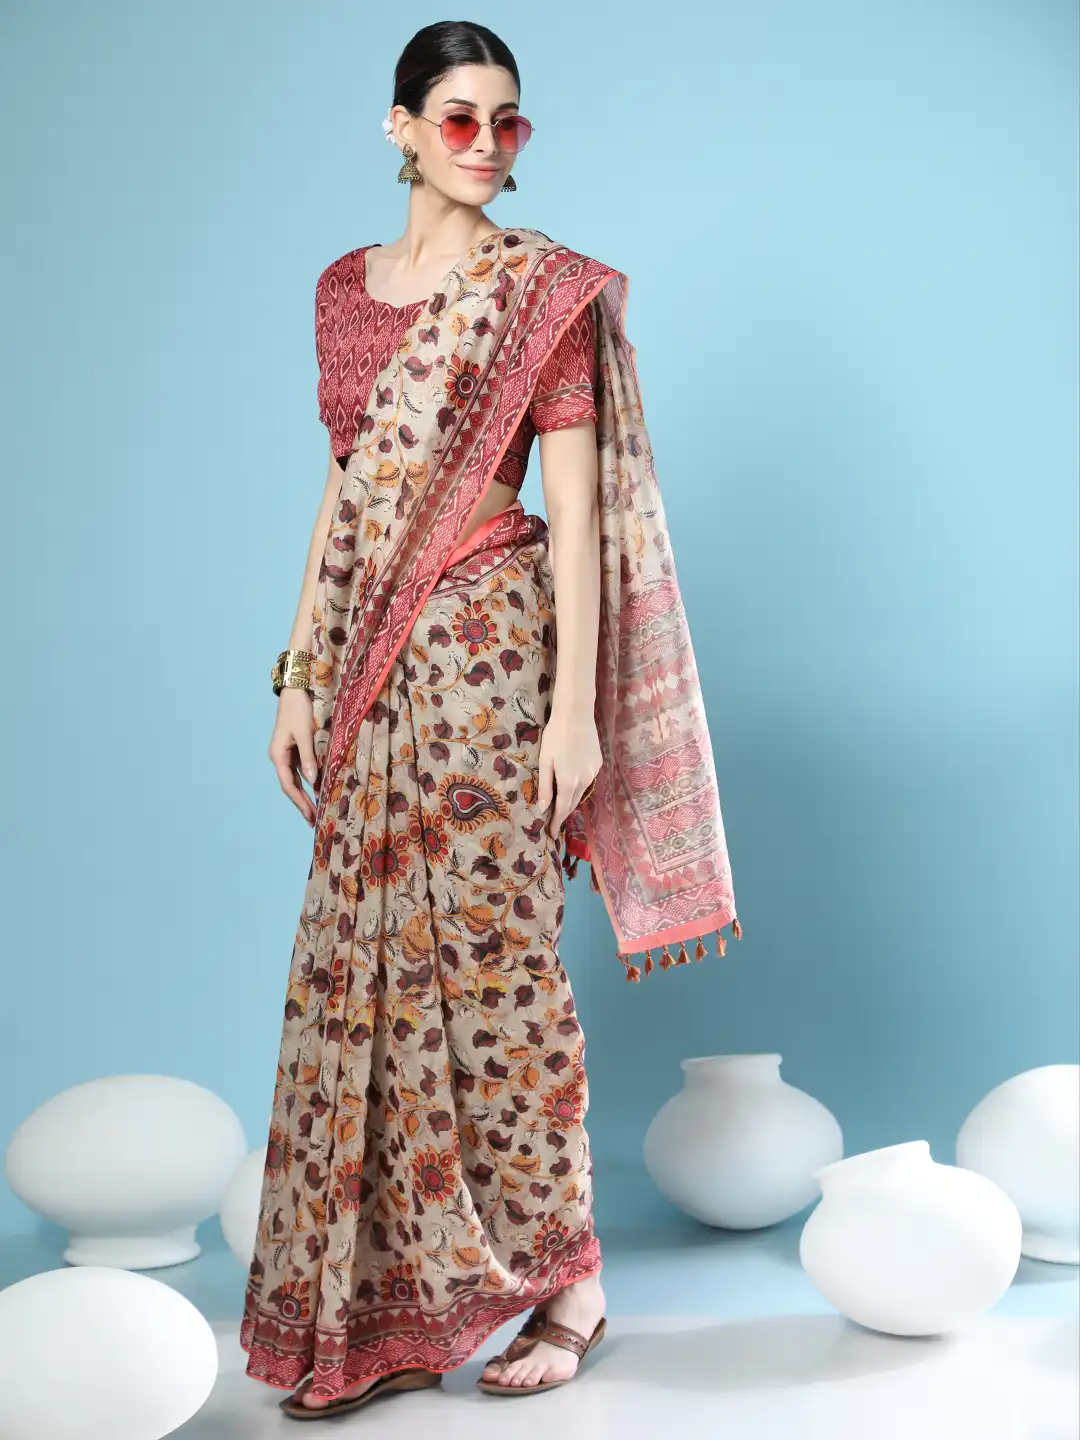 Ladies Floral Print Cotton Mulmul Batik Saree at Rs.600/Piece in jaipur  offer by Prateek Textile